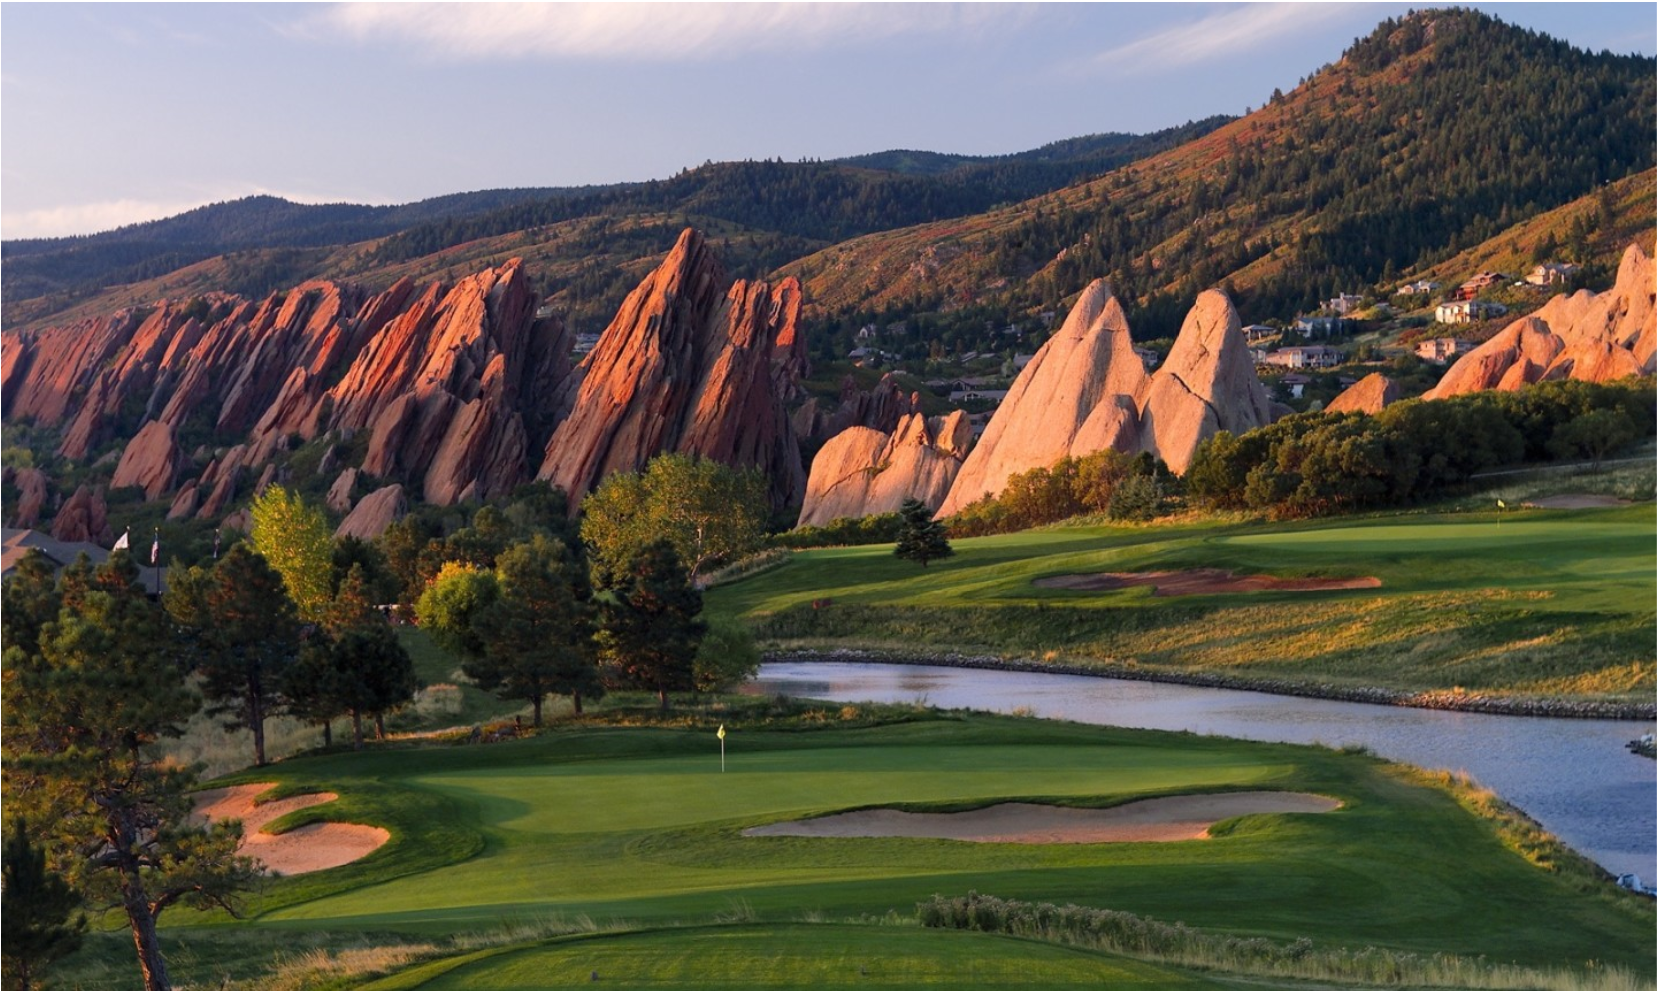 10th Annual Colorado Wireless Association Golf Tournament